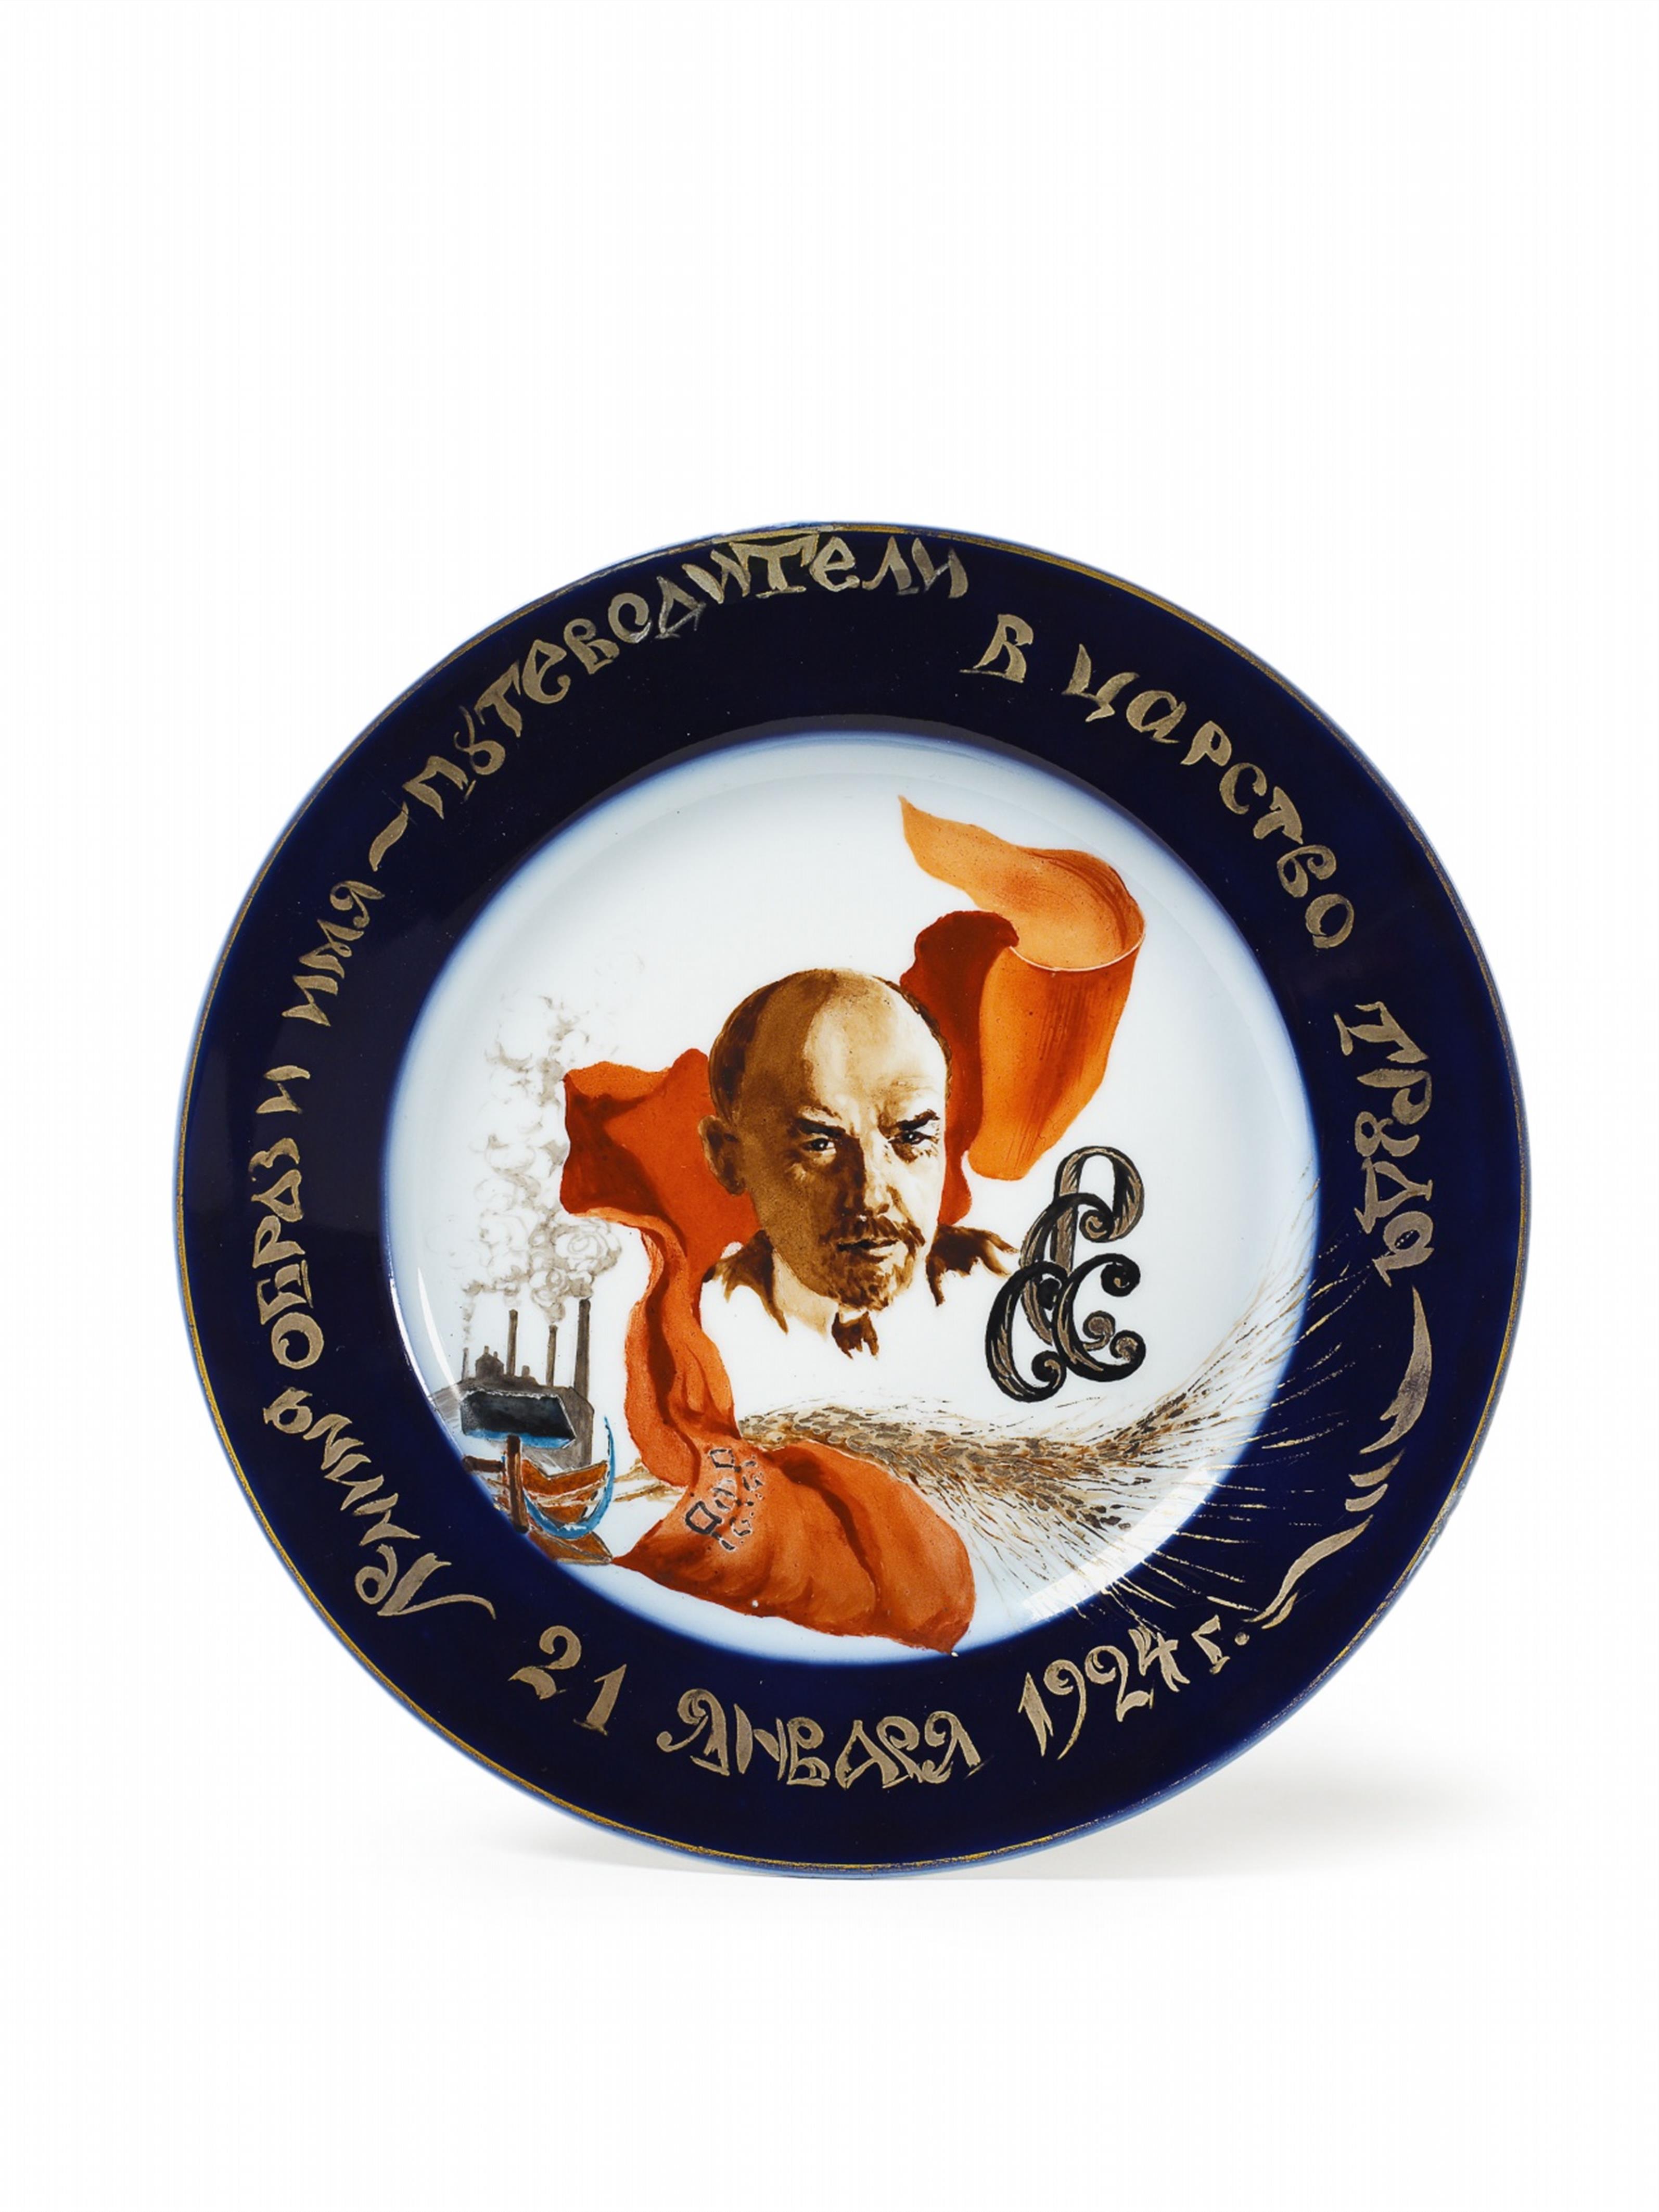 A commemorative porcelain plate with a sepia portrait of Lenin. - image-1